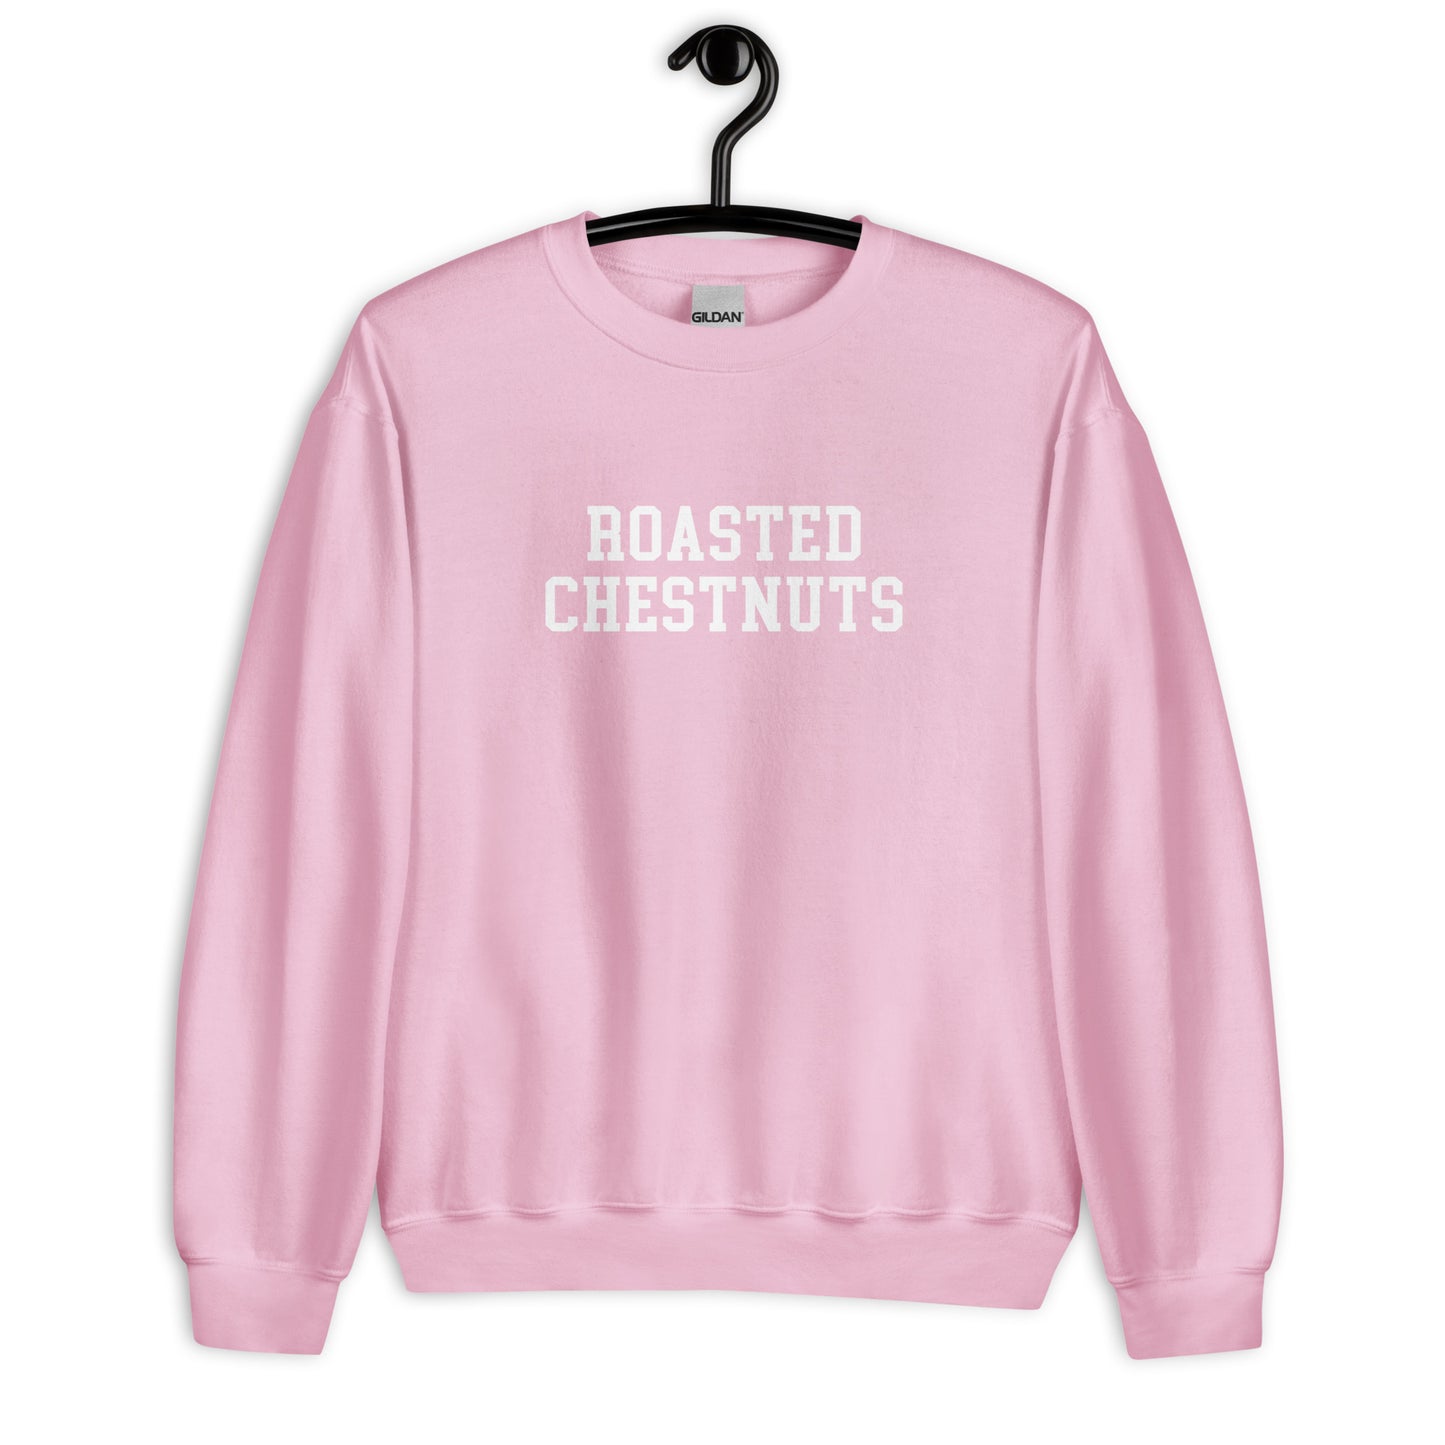 Roasted Chestnuts Sweatshirt - Straight Font